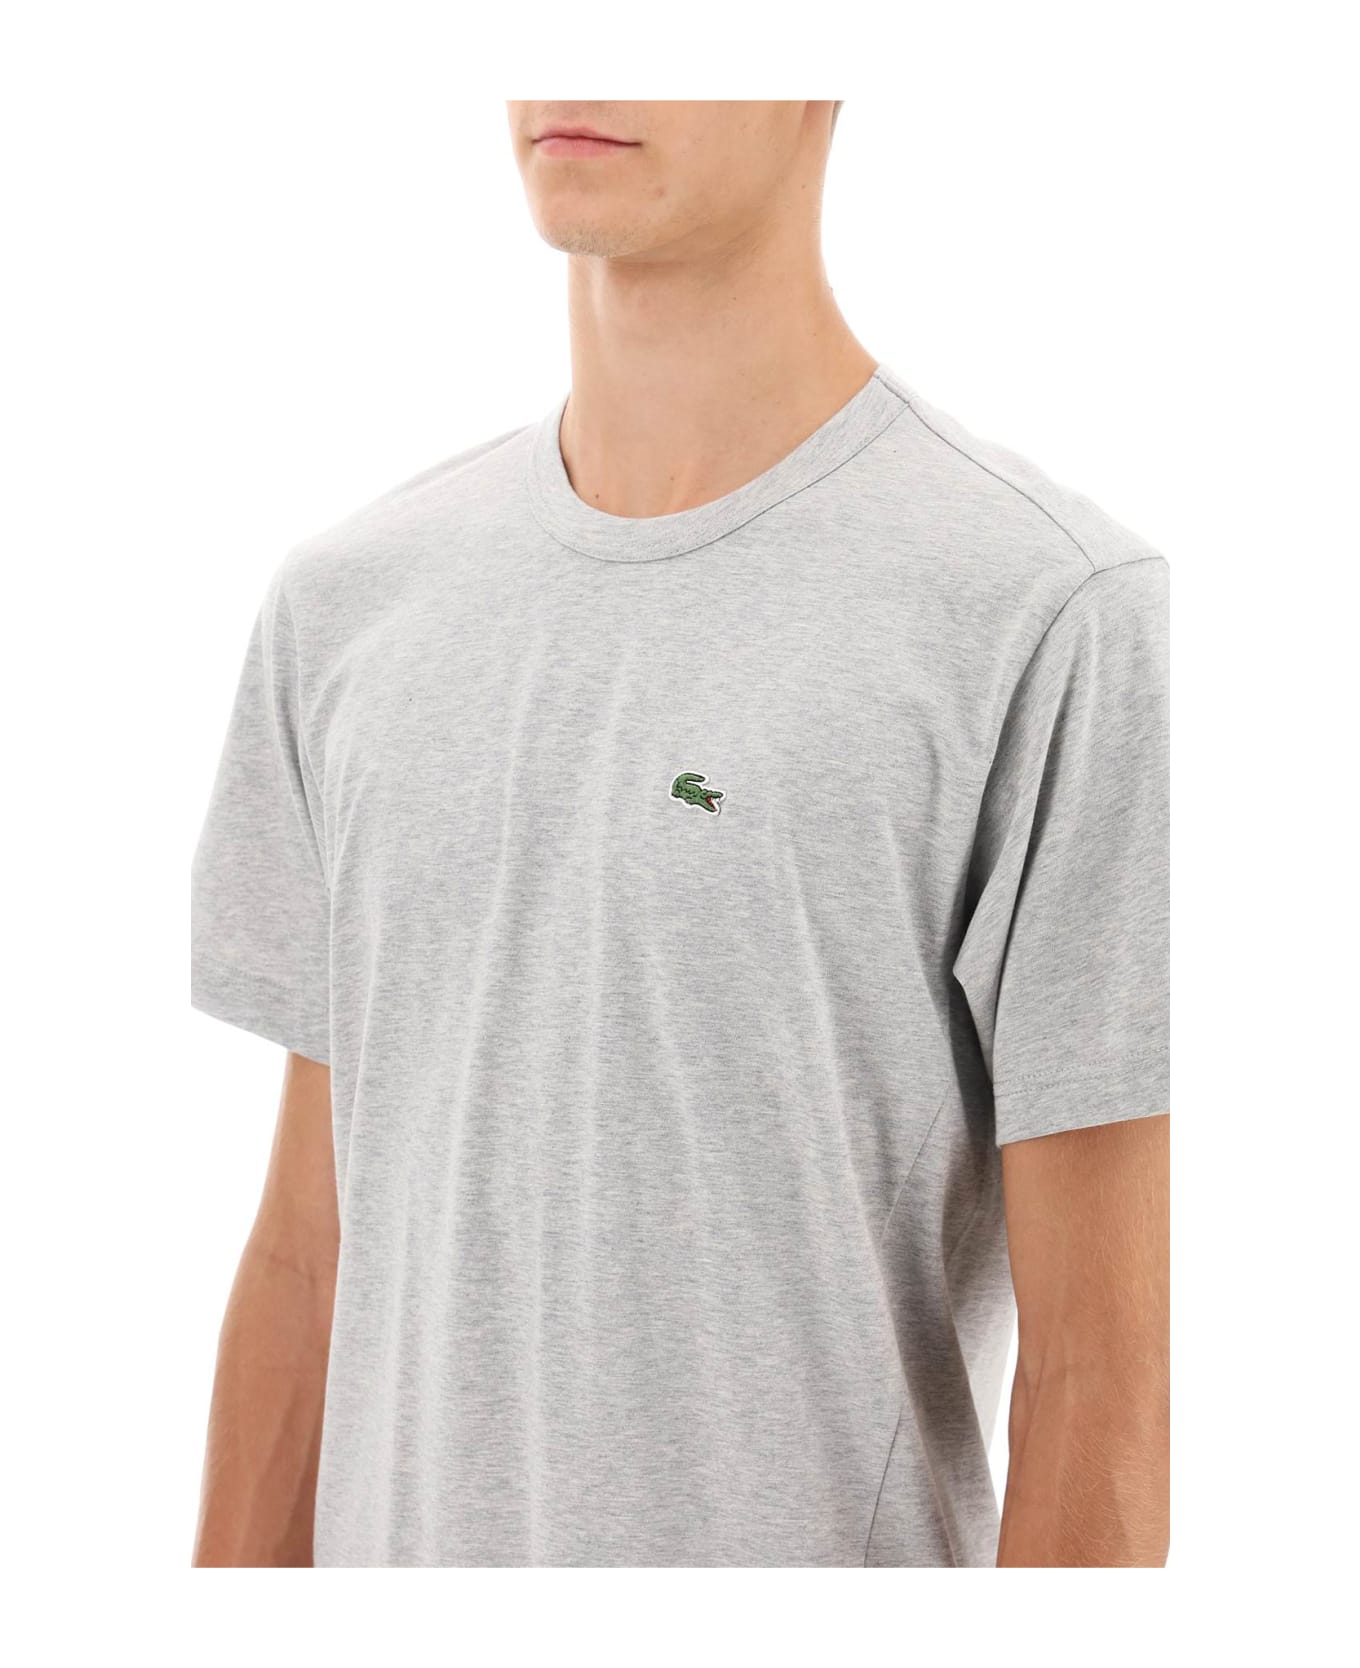 Comme des Garçons Shirt X Lacoste Asymmetrical T-shirt - TOP GREY (Grey)